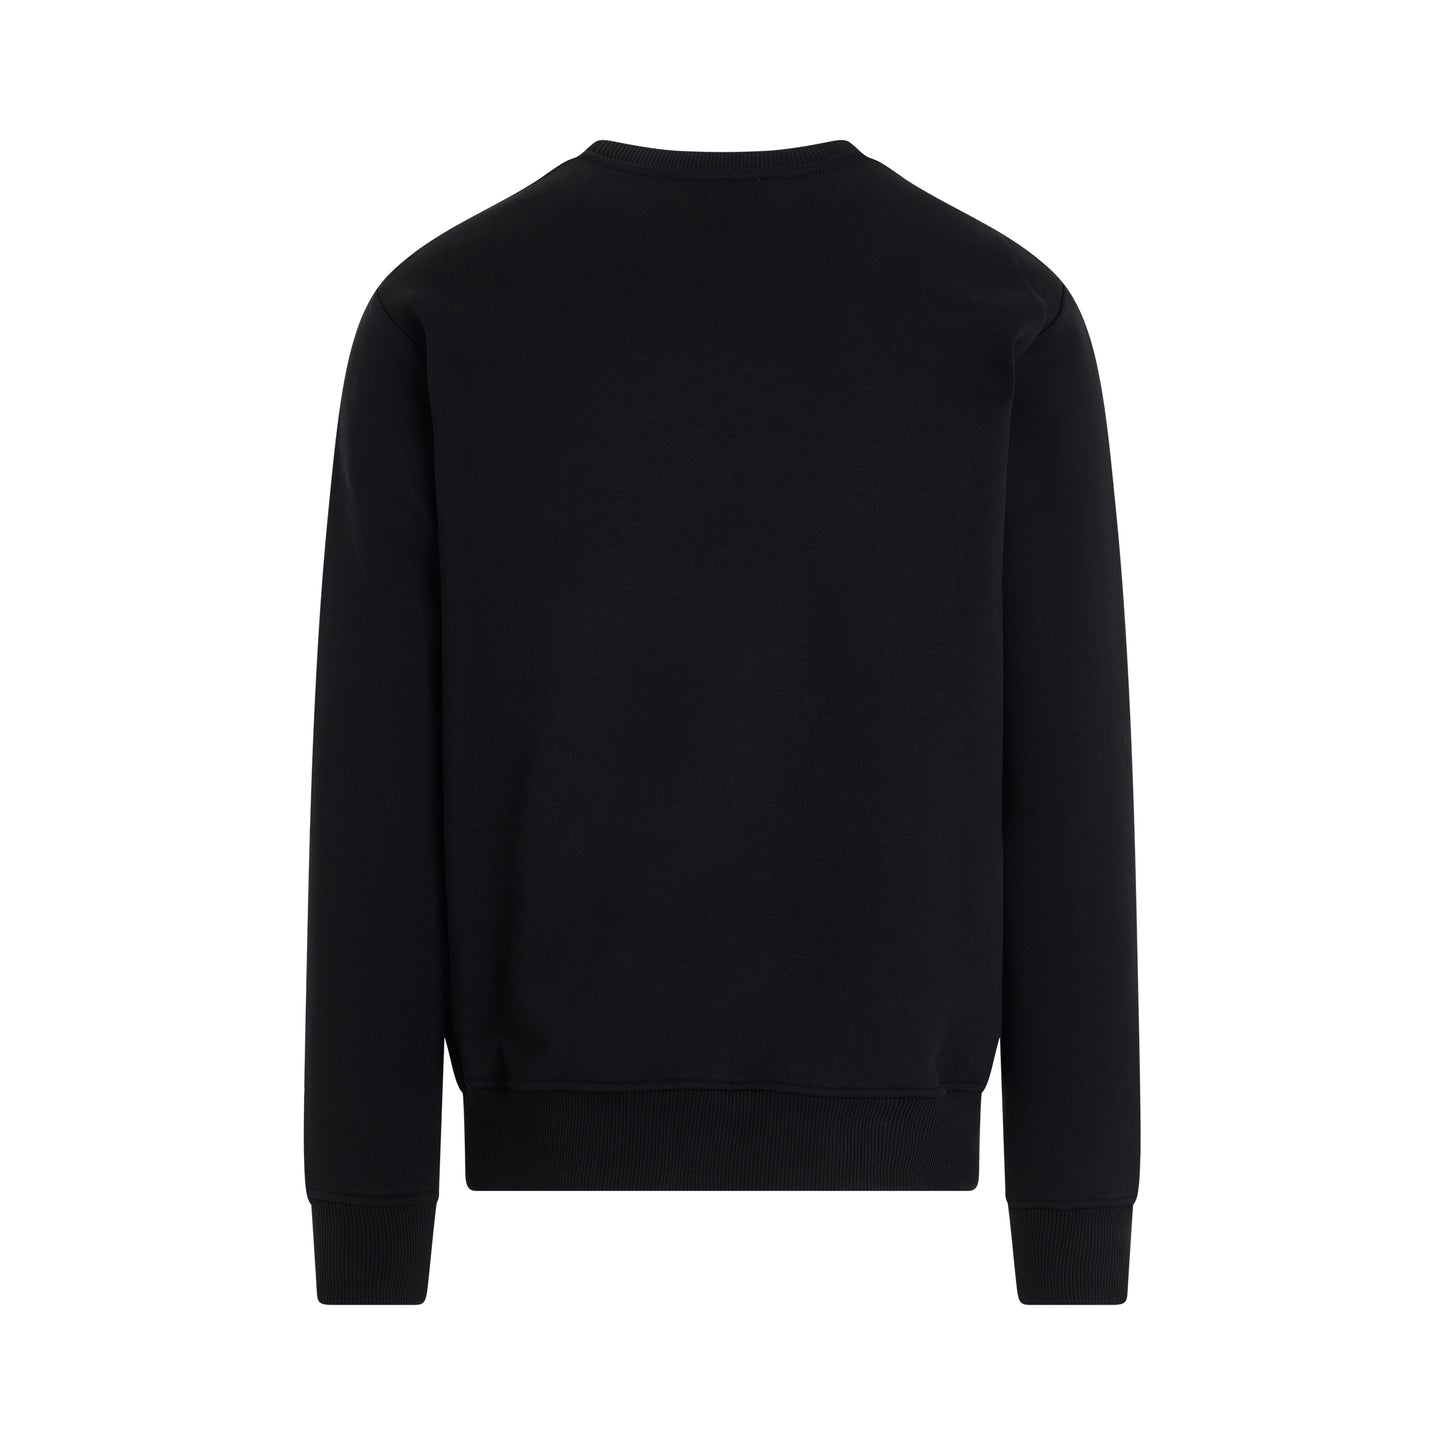 Balmain Stitch Collar Sweatshirt in Black/White